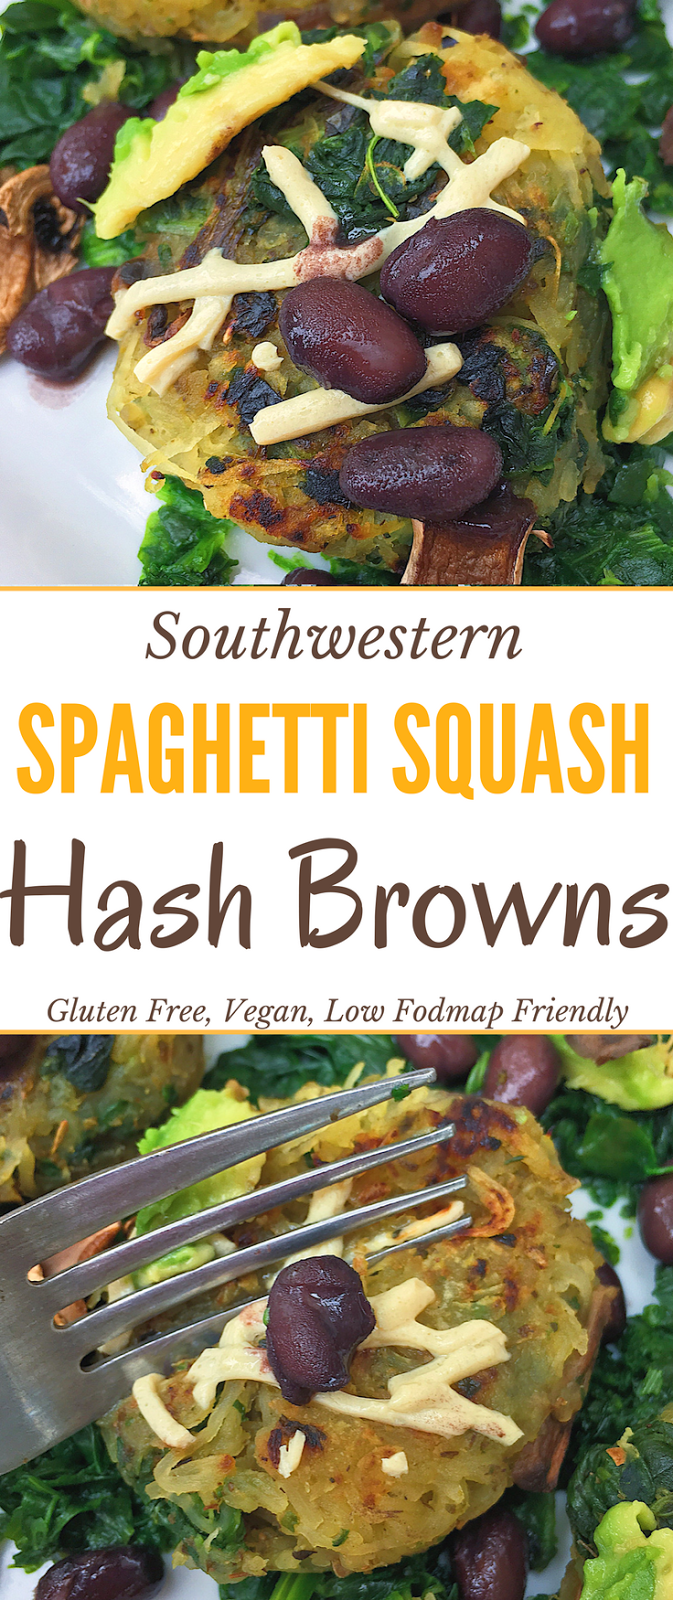 Southwestern Spaghetti Squash Hash Browns (Gluten Free, Vegan, Low Fodmap Friendly)